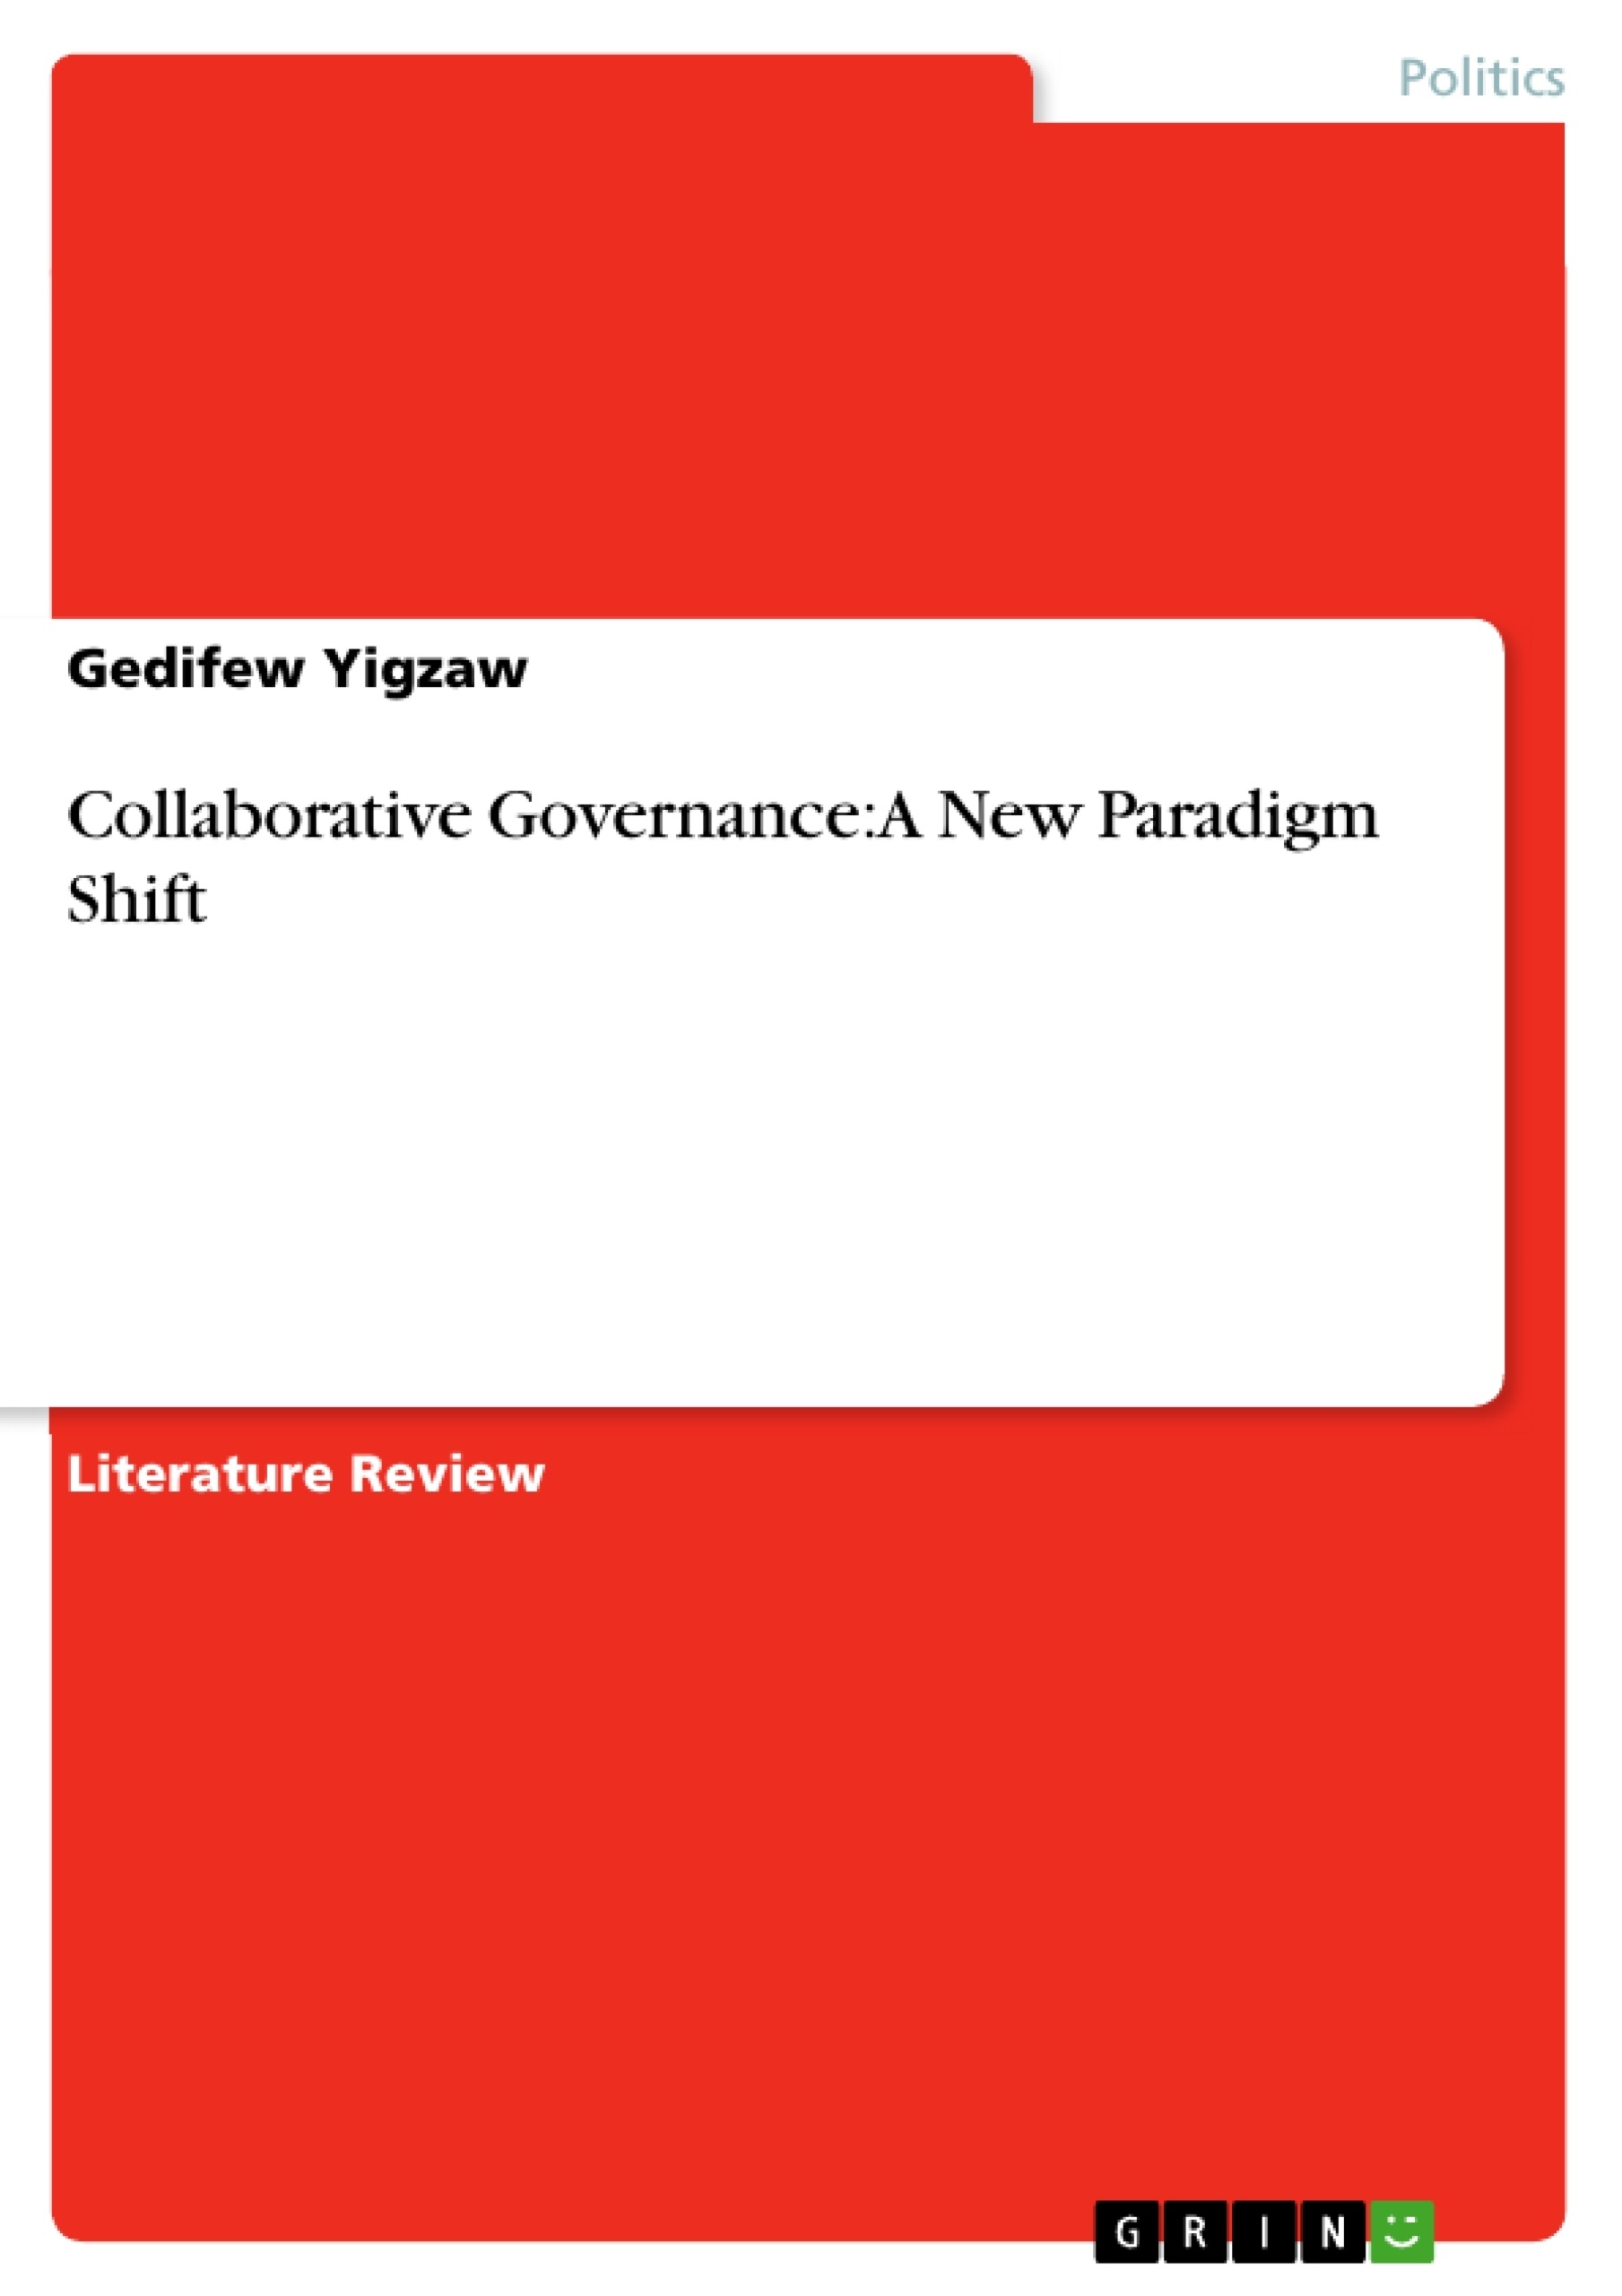 Title: Collaborative Governance: A New Paradigm Shift